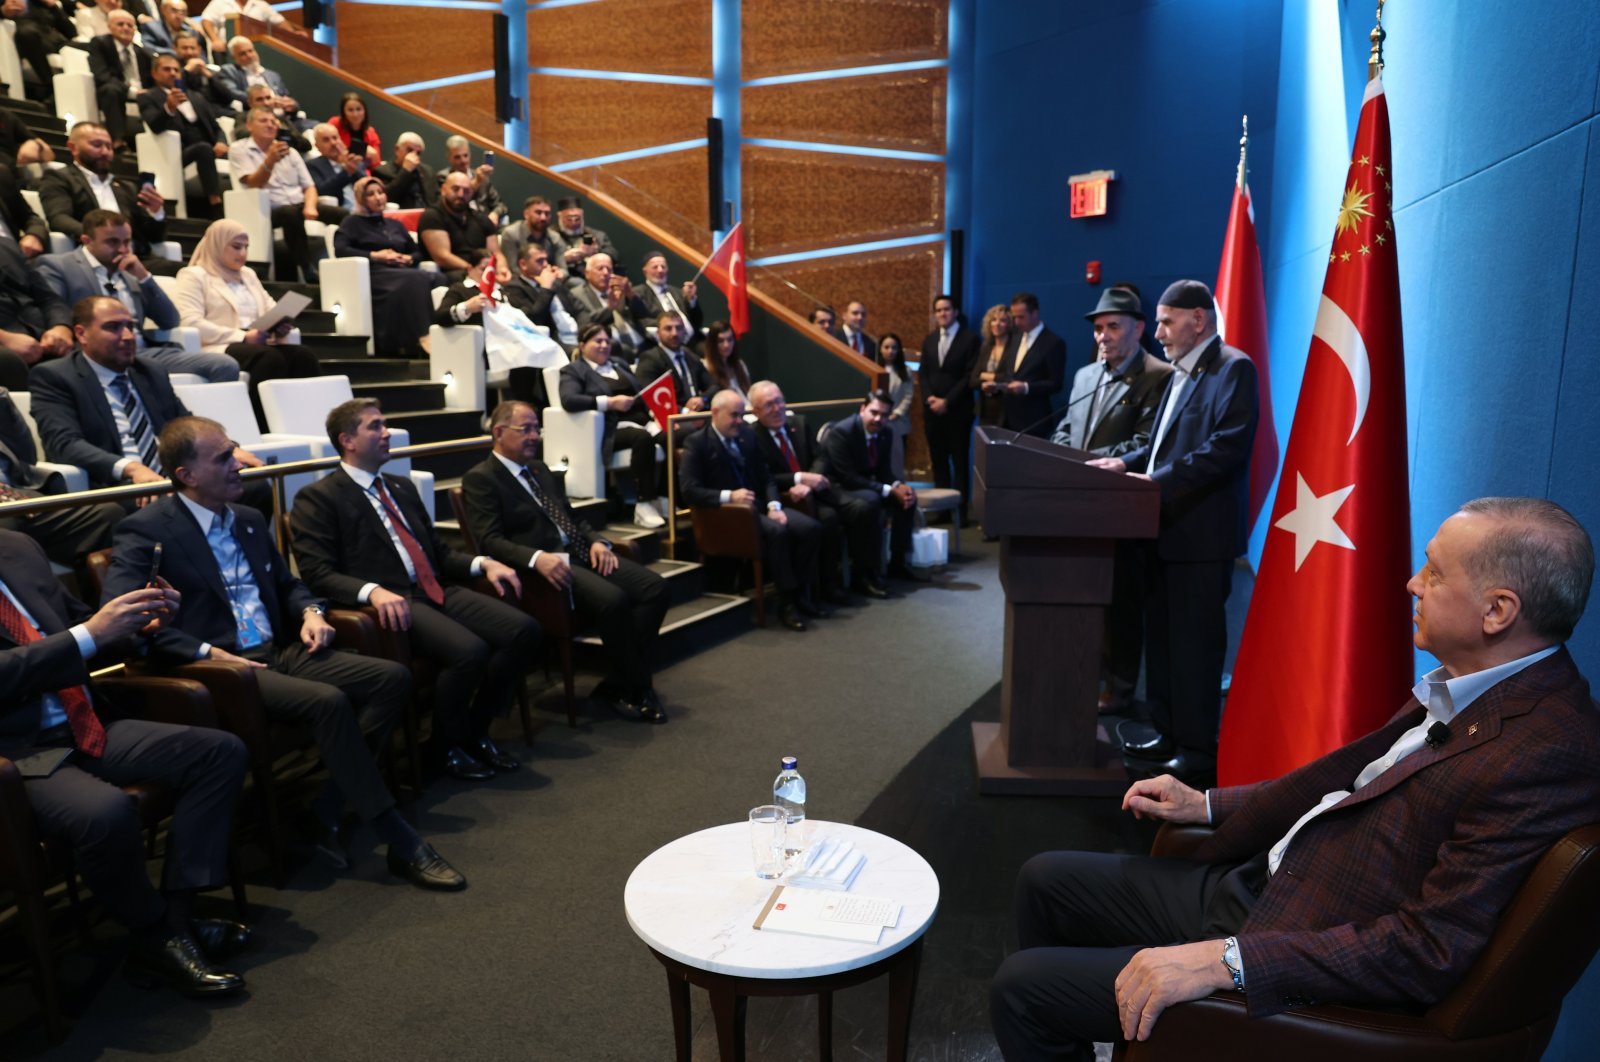 Ahıska Turk Mihrali Mametoğlu speaks as President Recep Tayyip Erdoğan (R) listens during the event in New York, United States, Sept. 17, 2023. (IHA Photo)